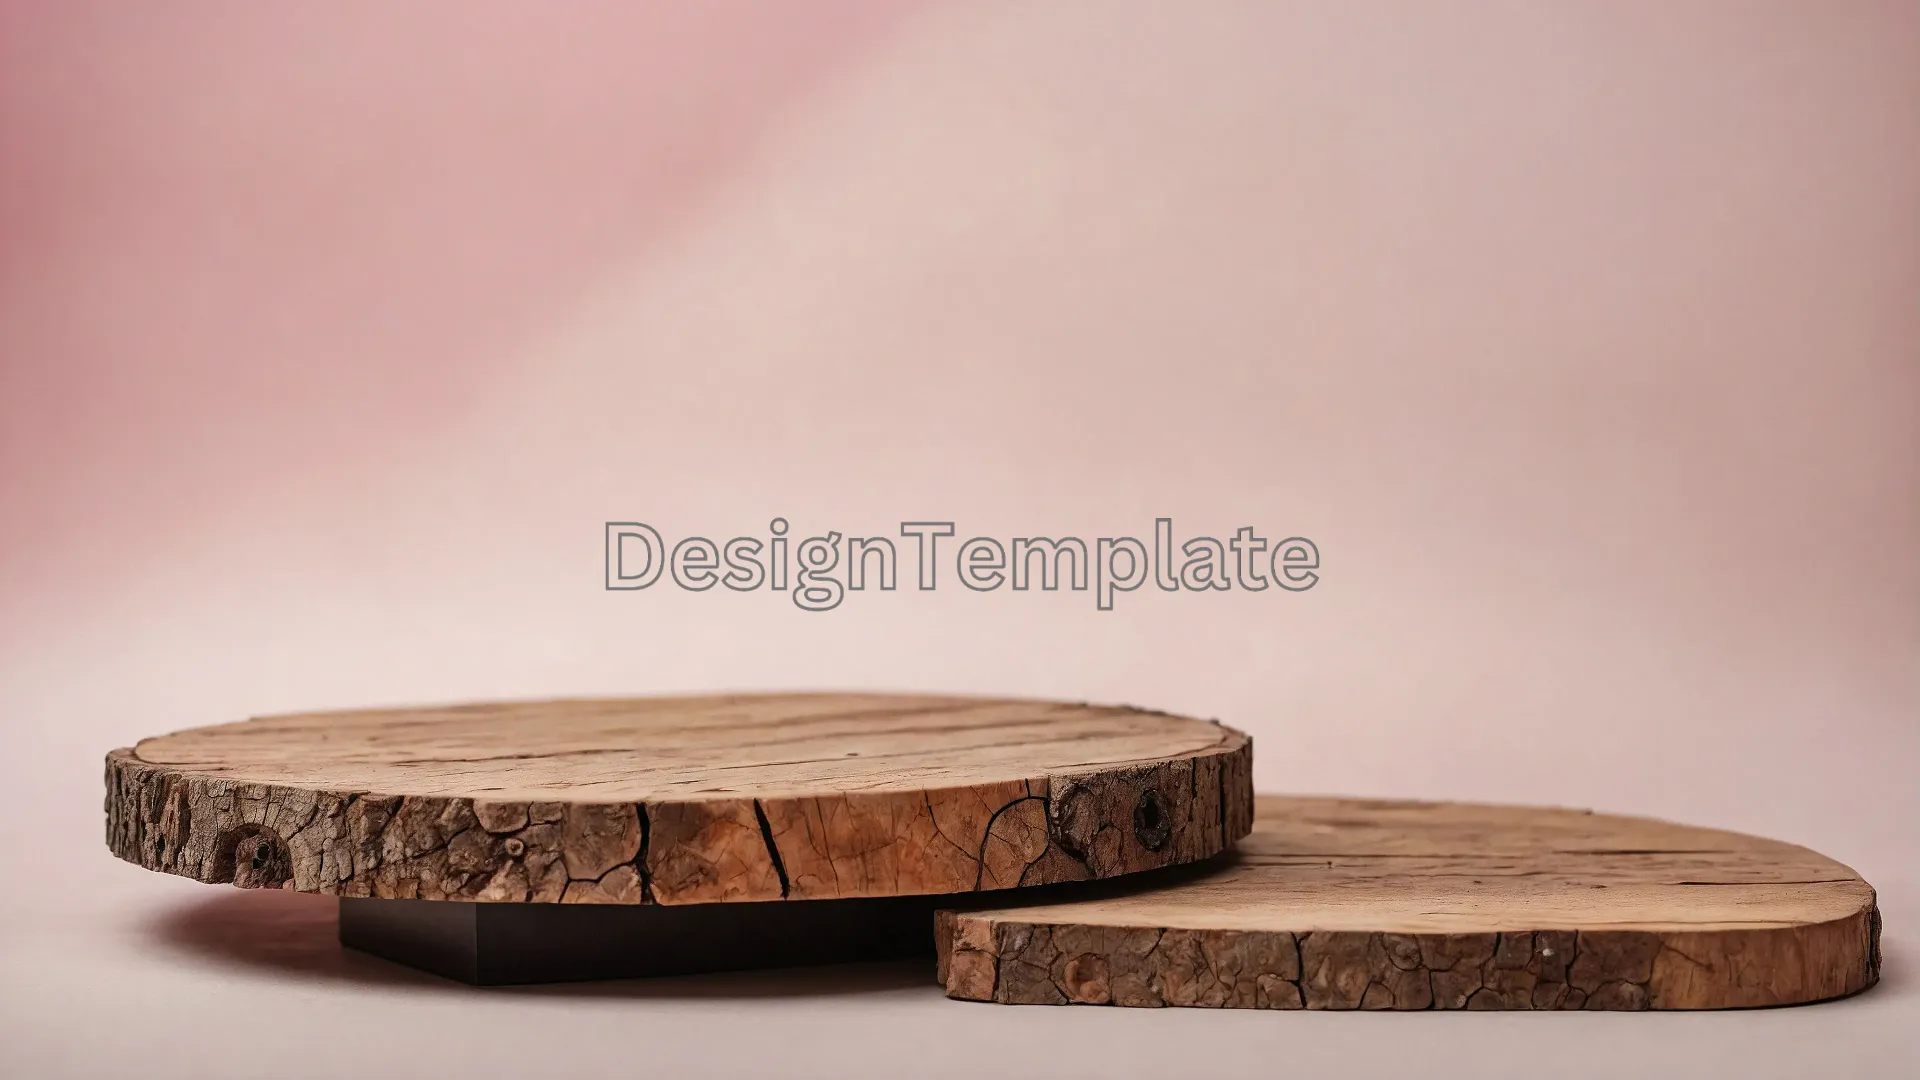 Rustic Wood Slice Podium on Pink Pastel Background Image